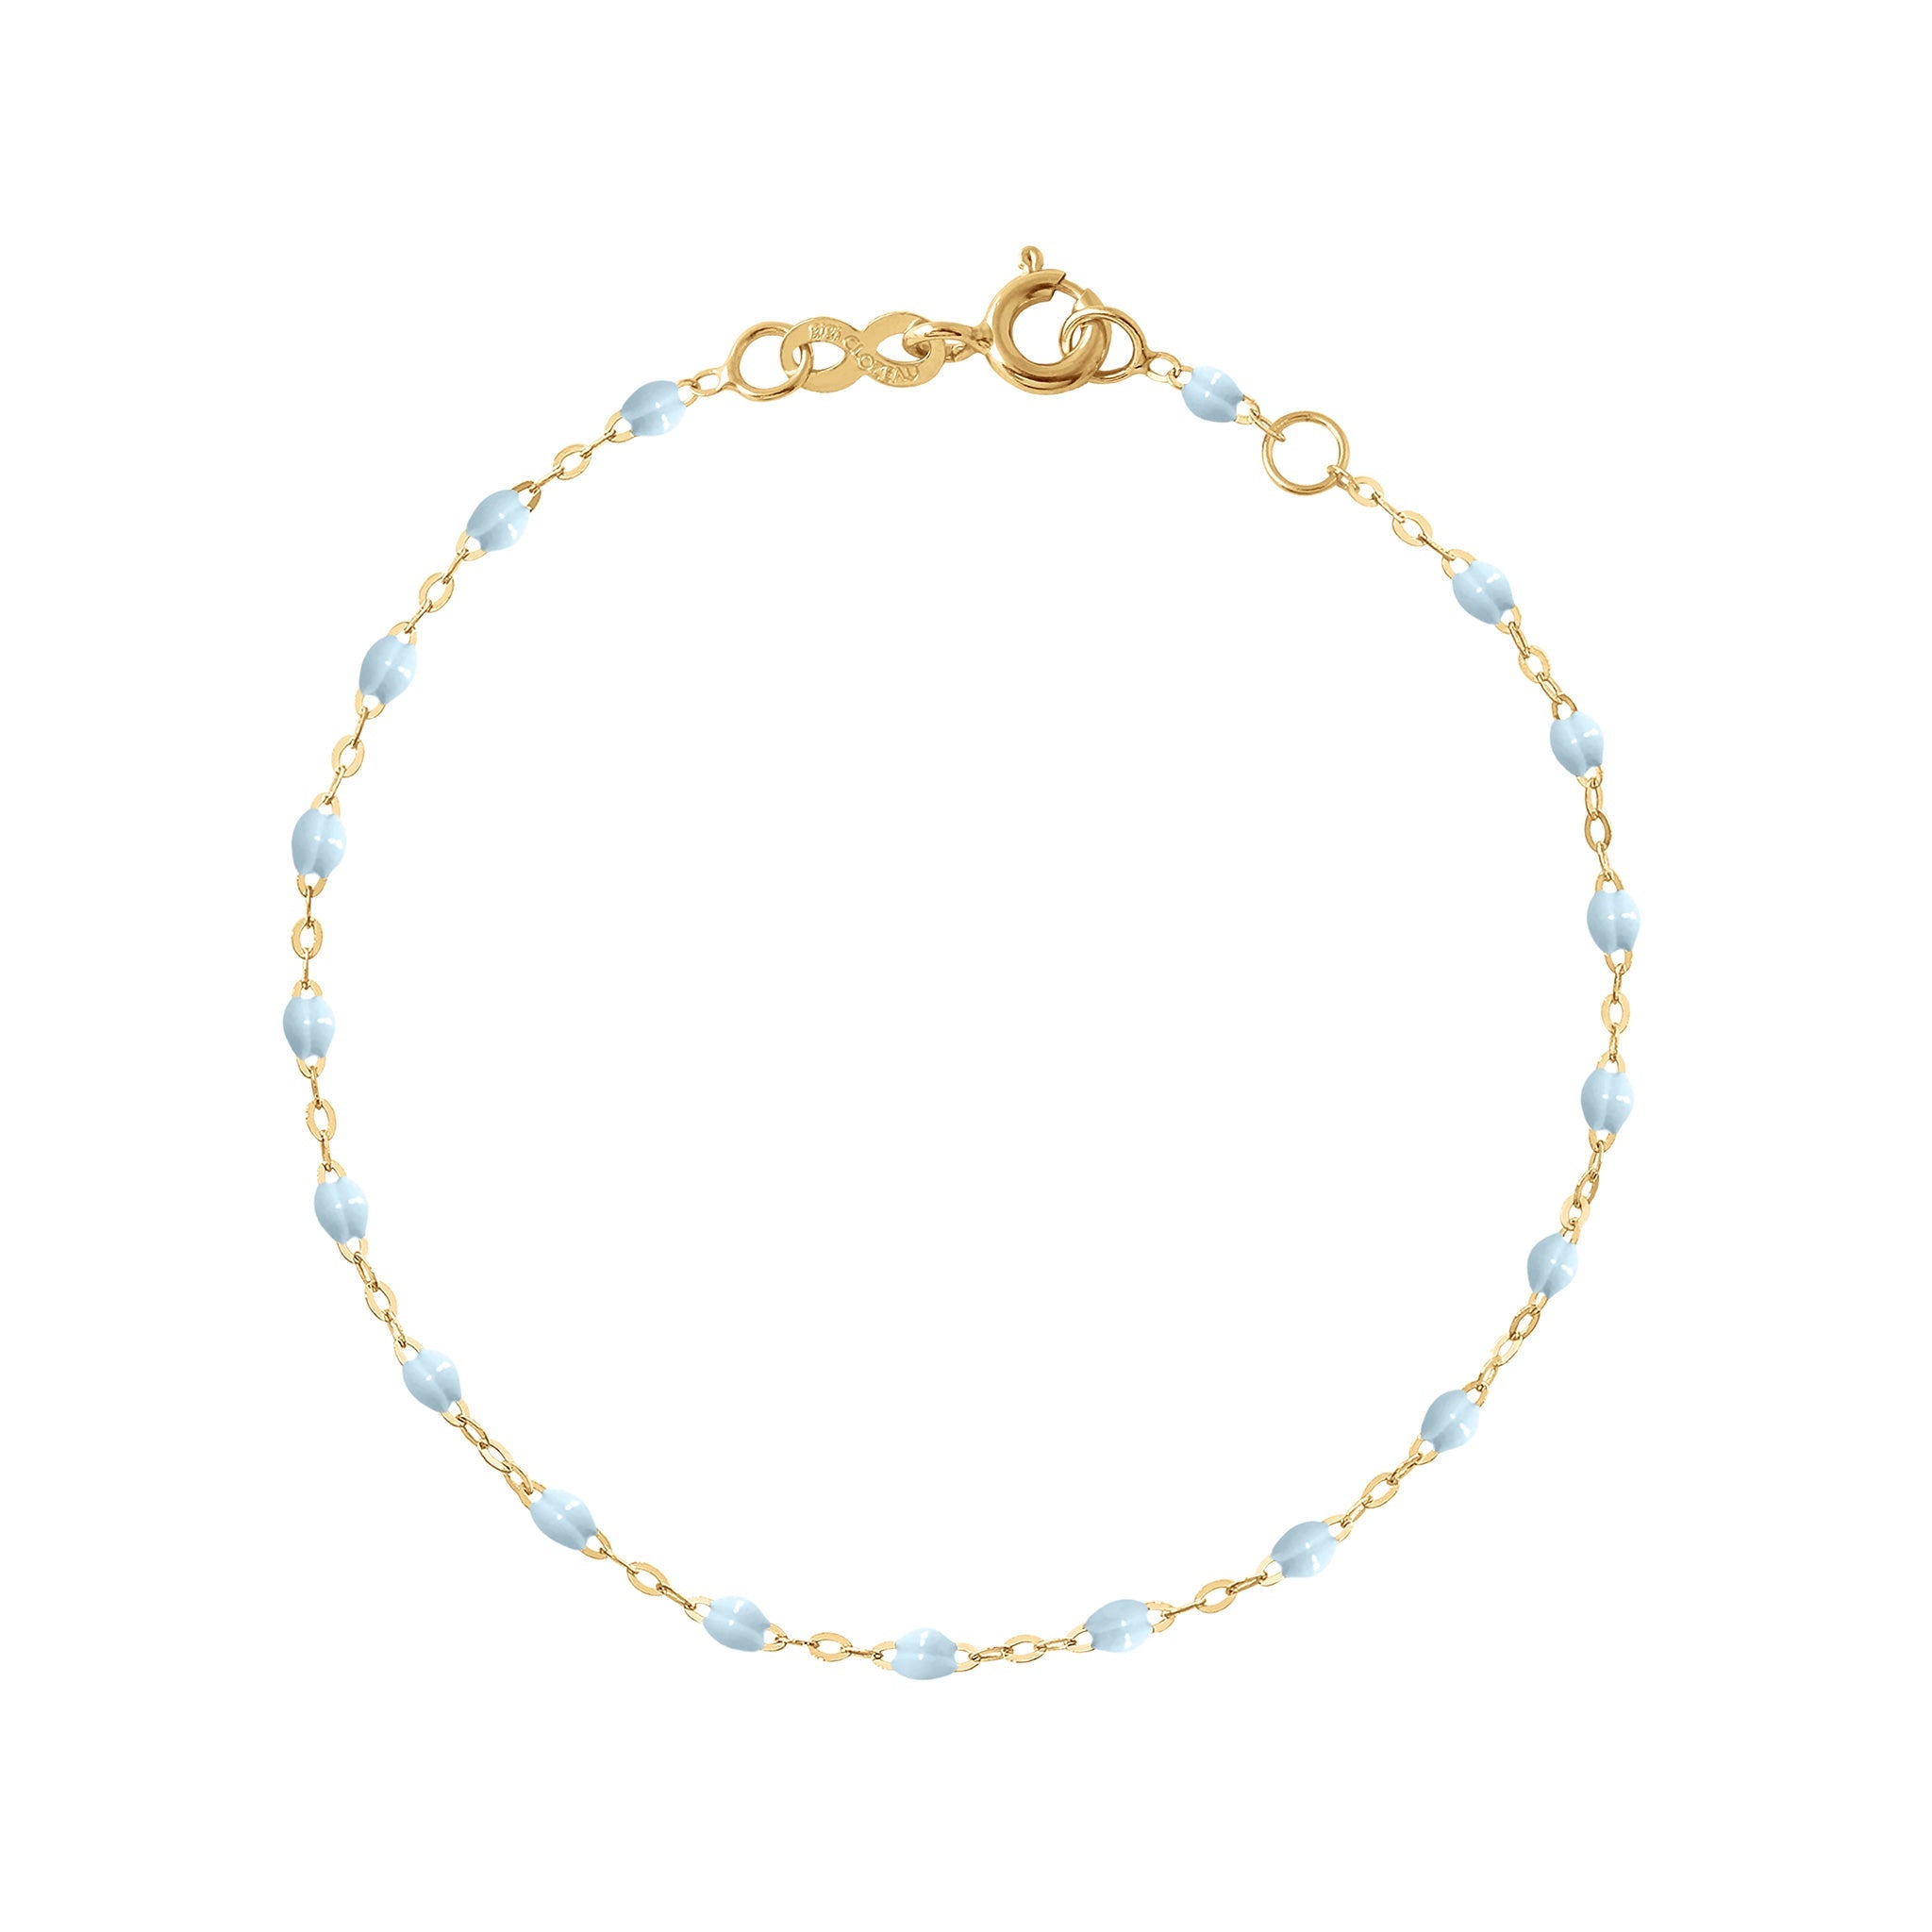 Bracelet bébé bleu layette Classique Gigi, or jaune, 13 cm classique gigi Référence :  b3gi001j1513xx -1